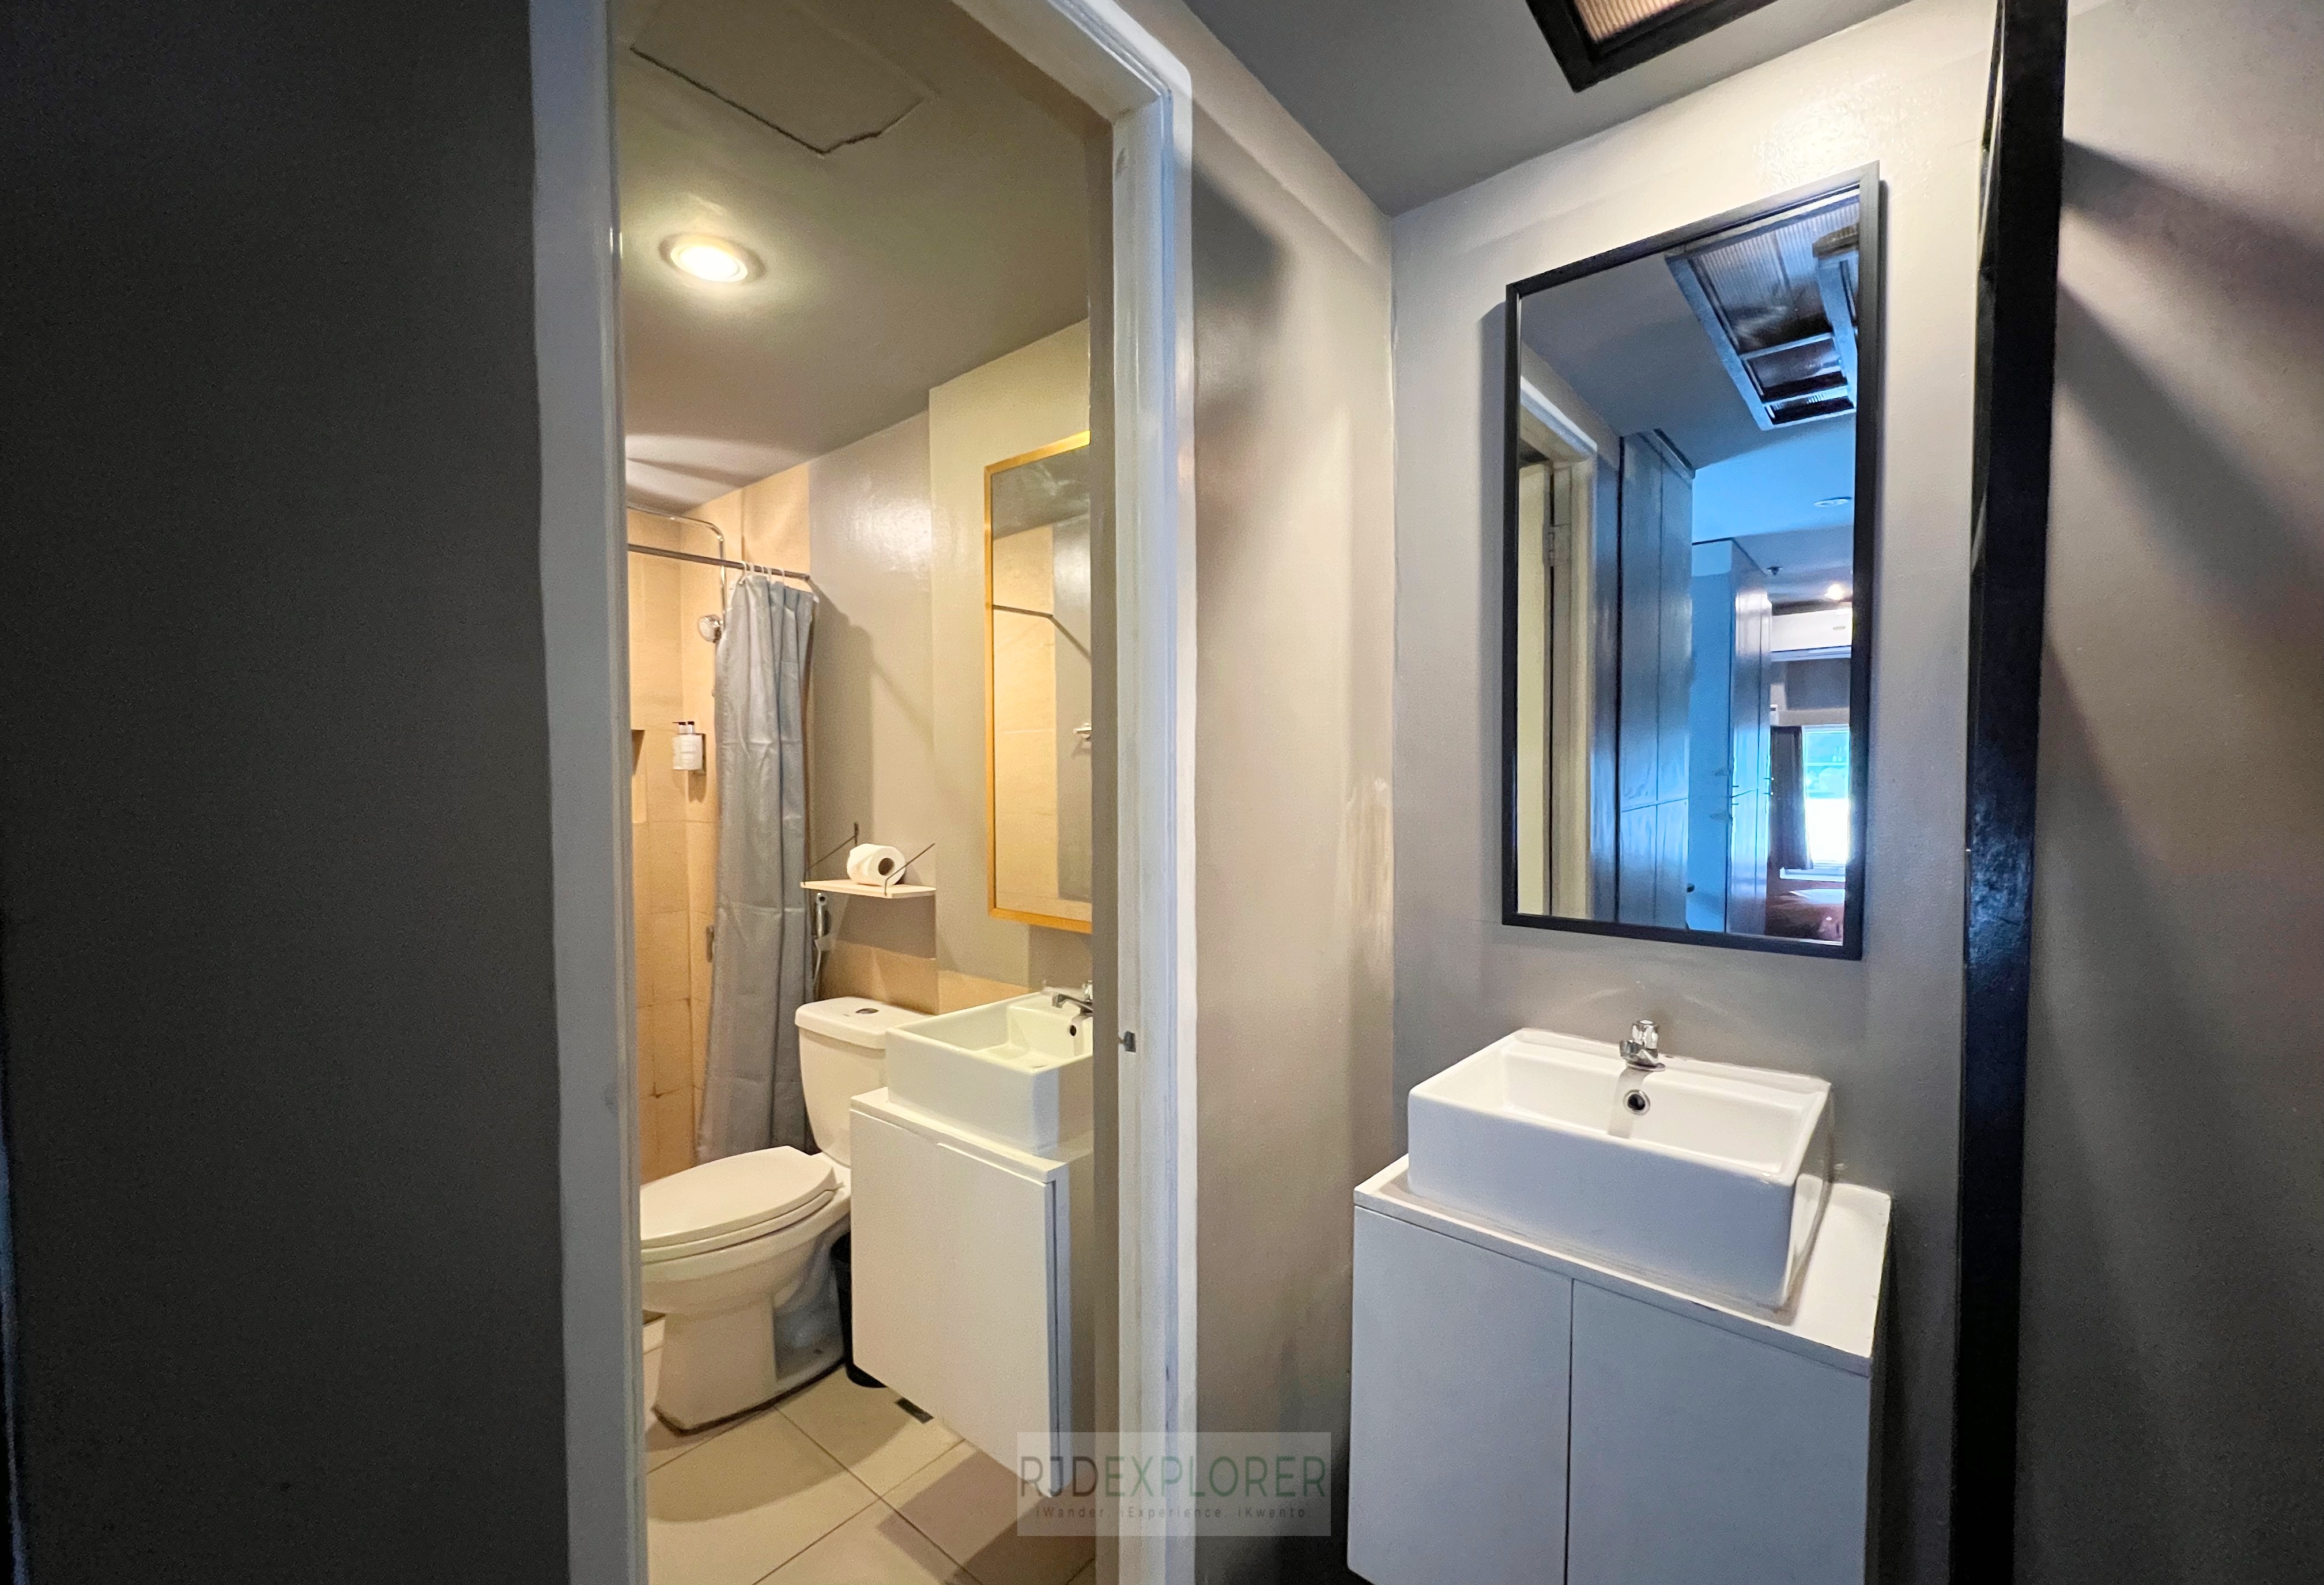 abraham manila toilet and shower dorm room